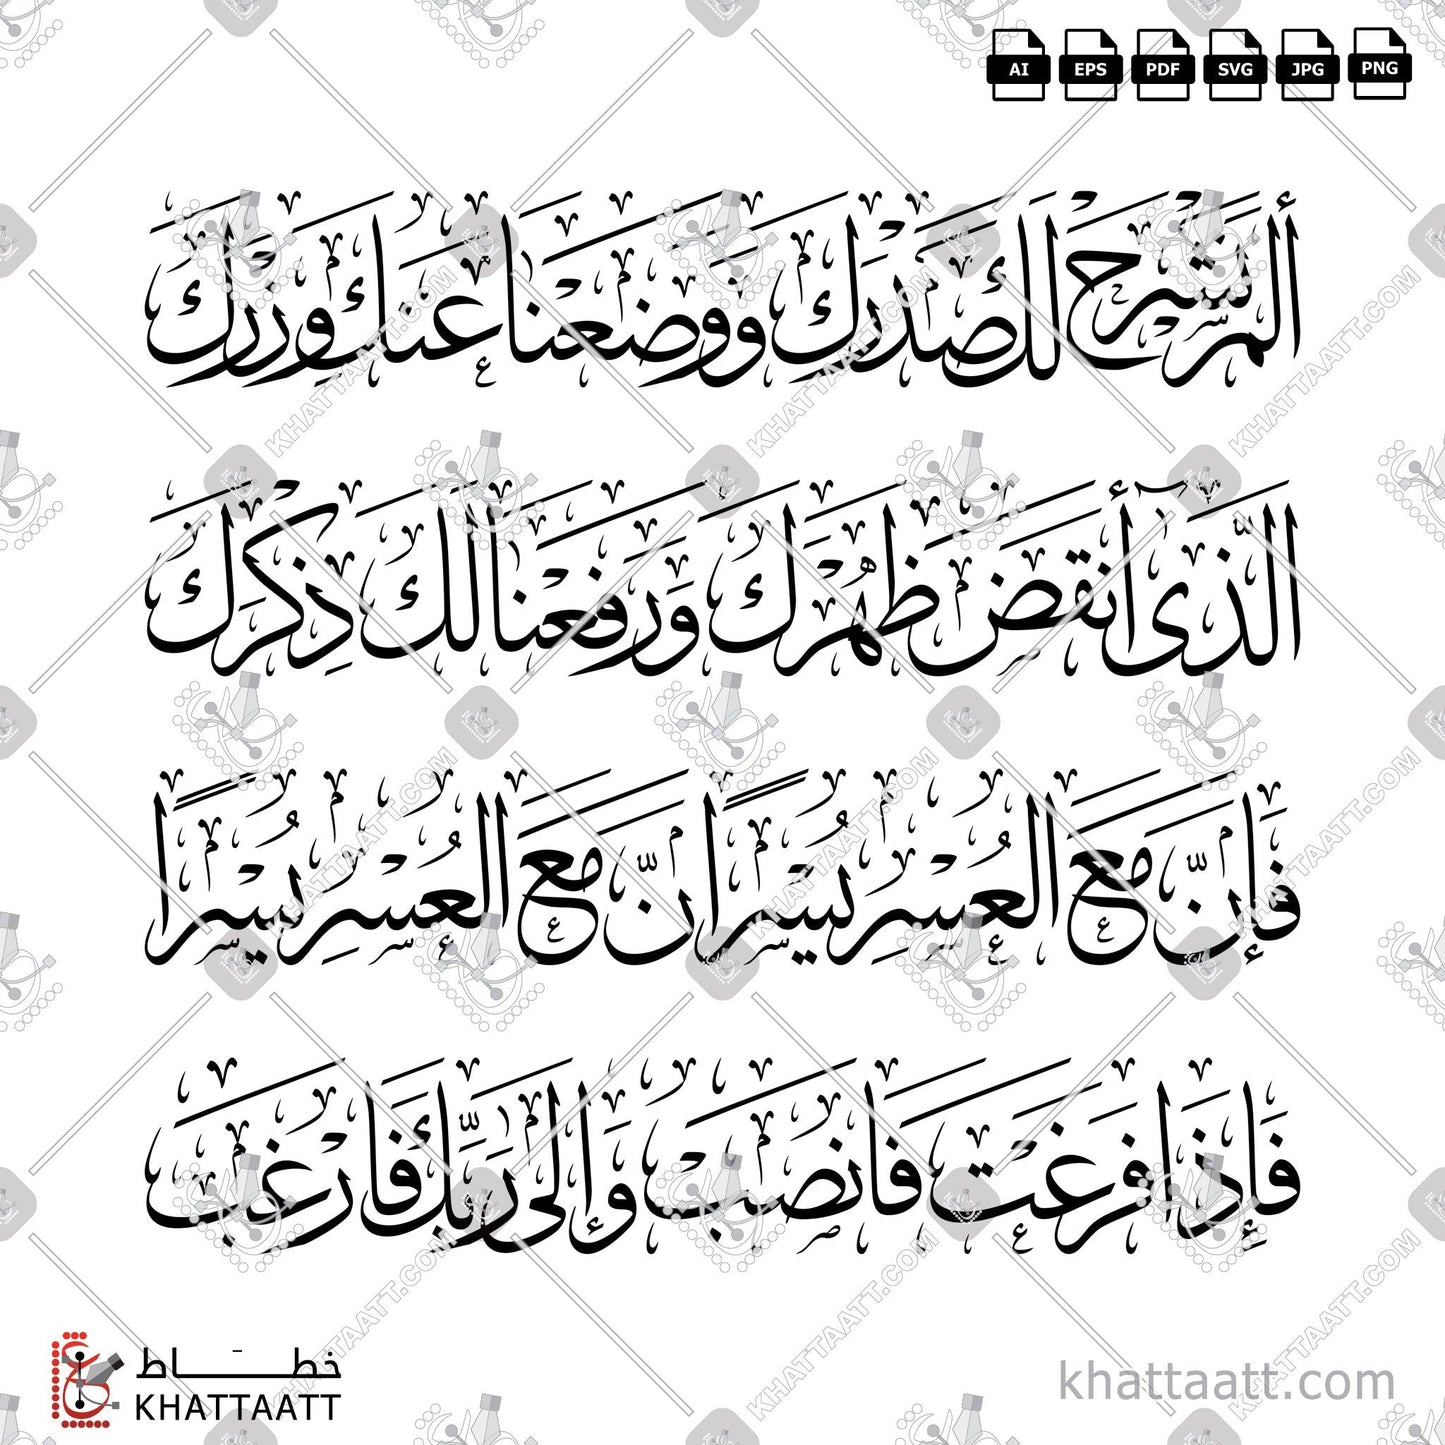 Download Arabic Calligraphy of Surat Ash-Sharh - سورة الشرح كاملة in Thuluth - خط الثلث in vector and .png